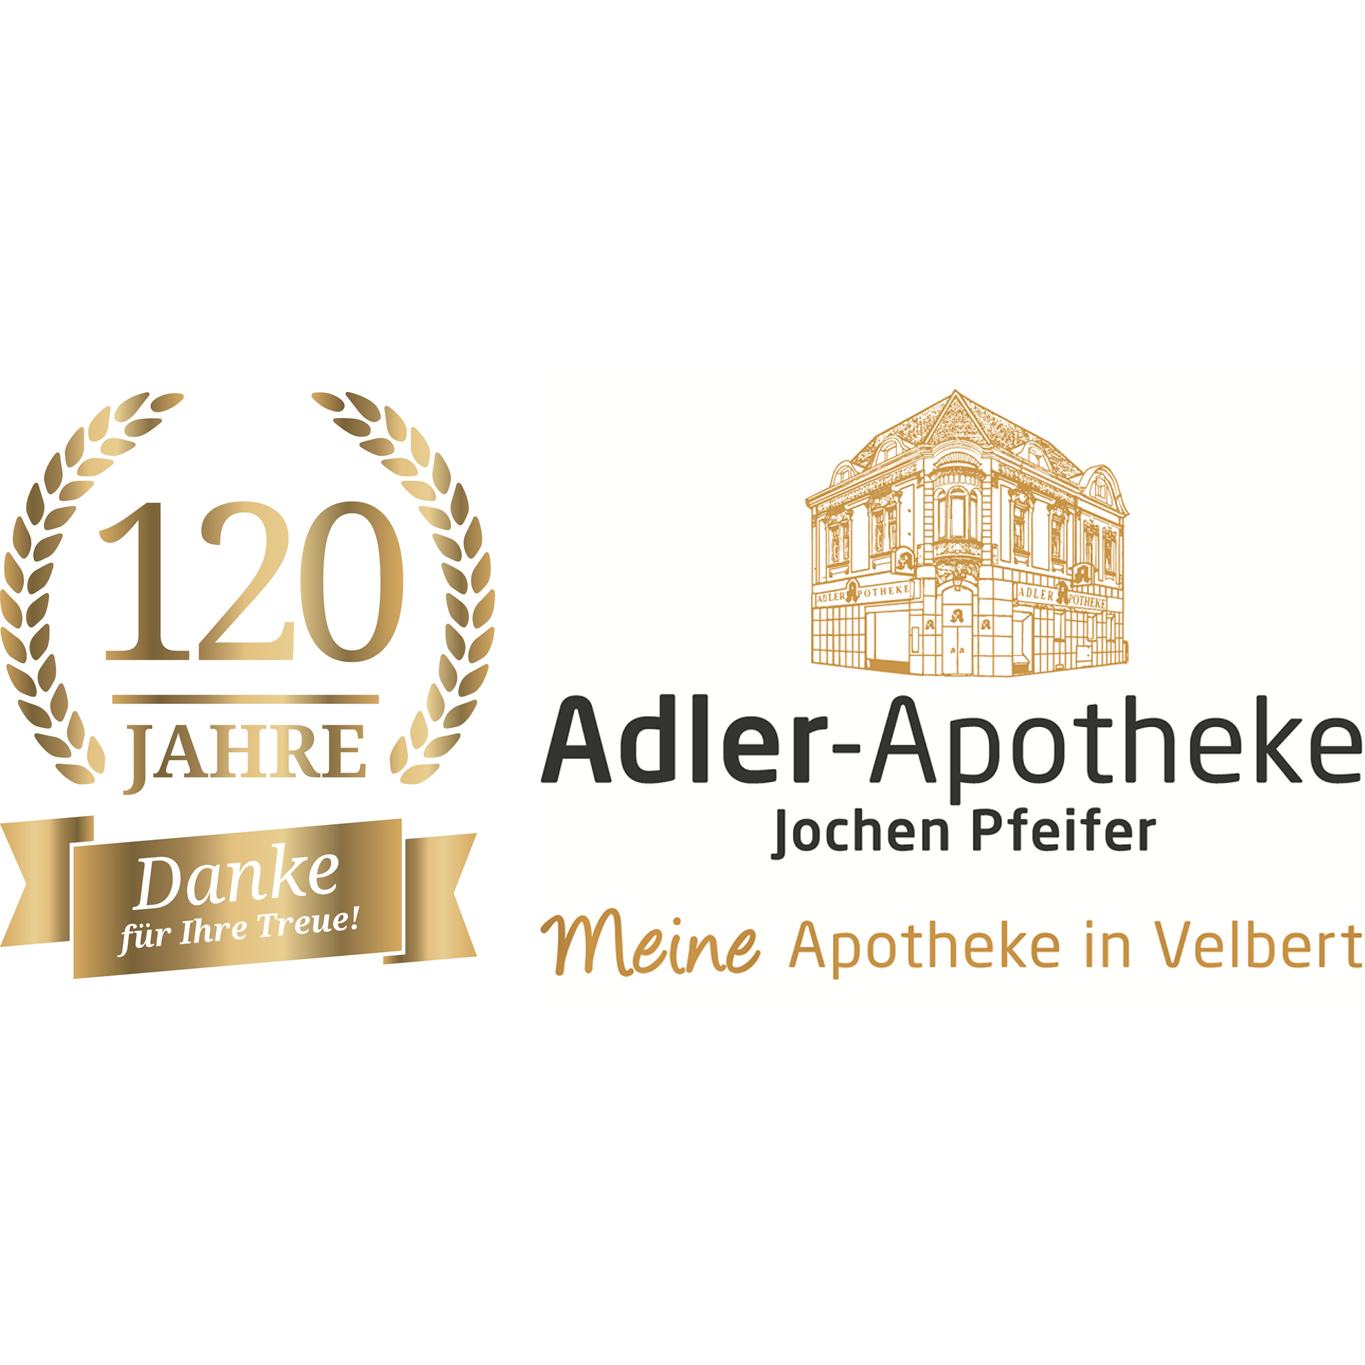 Adler-Apotheke in Velbert - Logo